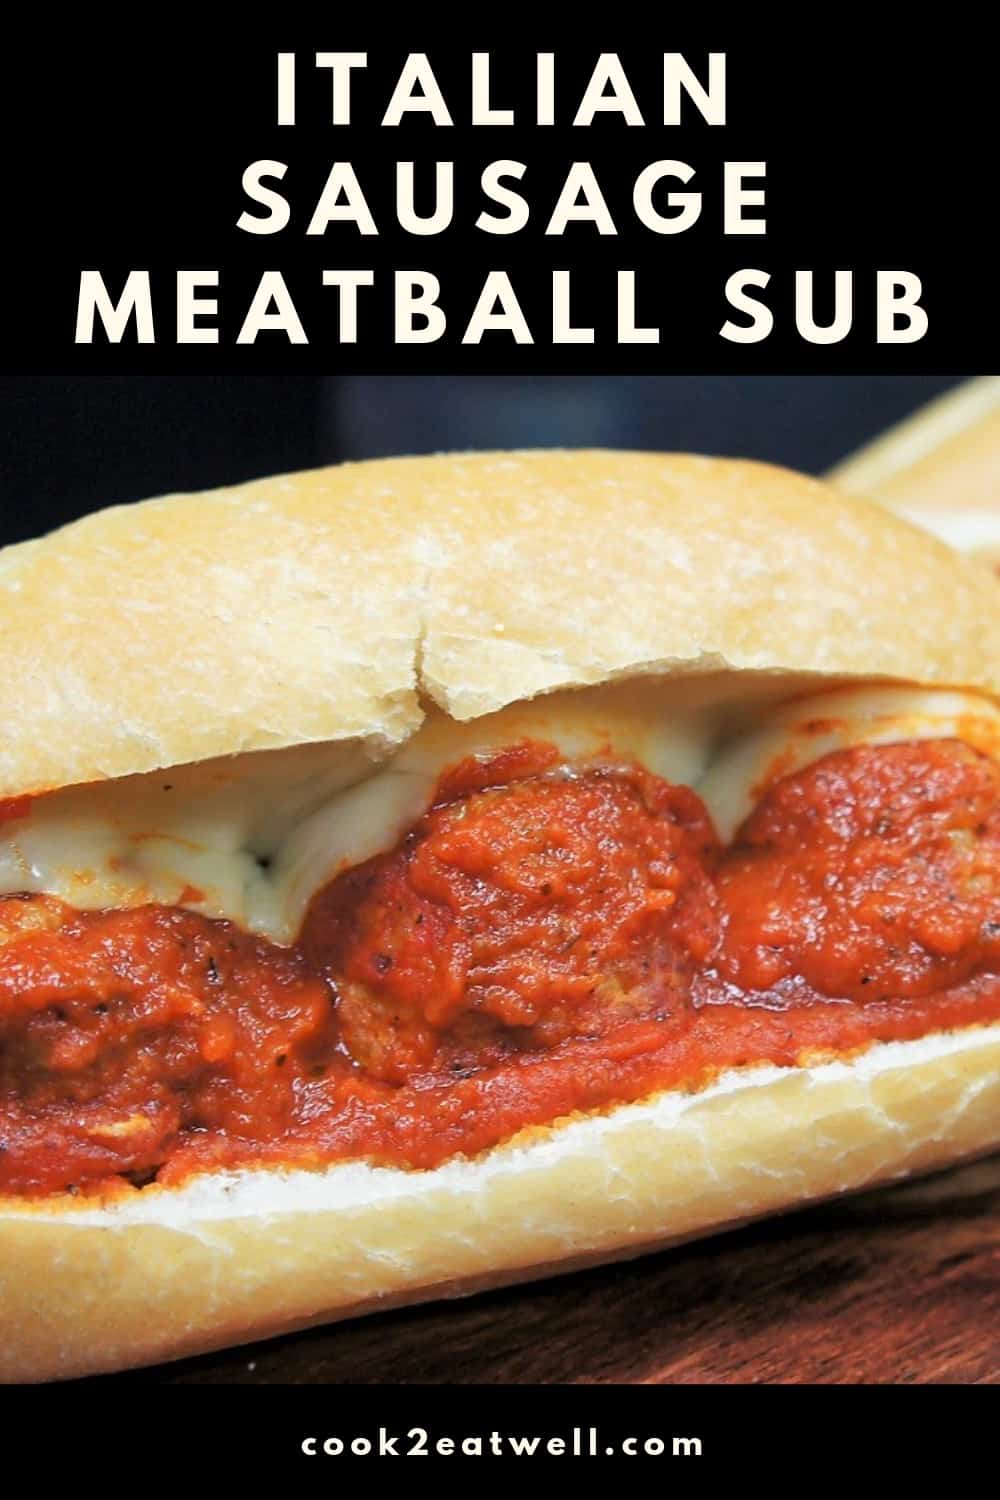 Italian Sausage Meatball Subs - Cook2eatwell